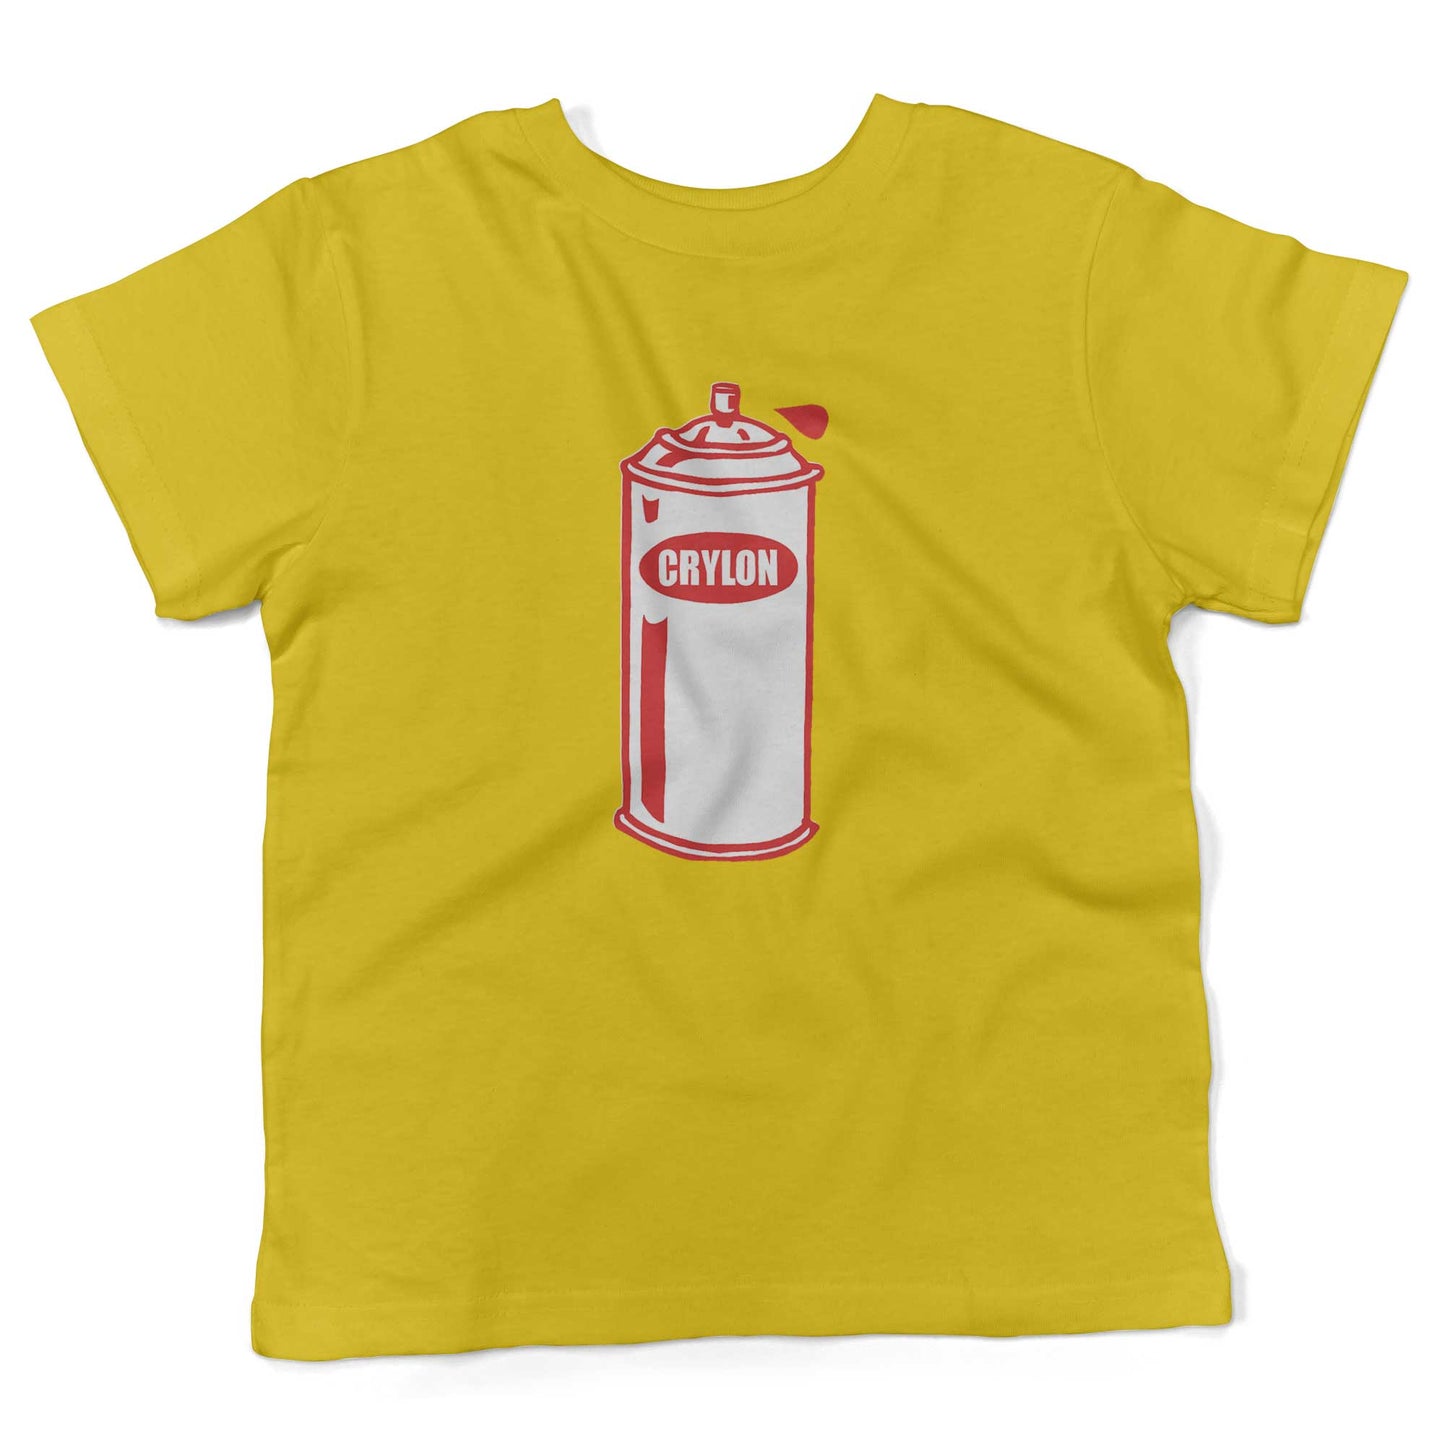 Crylon Cans Toddler Shirt-Sunshine Yellow-2T